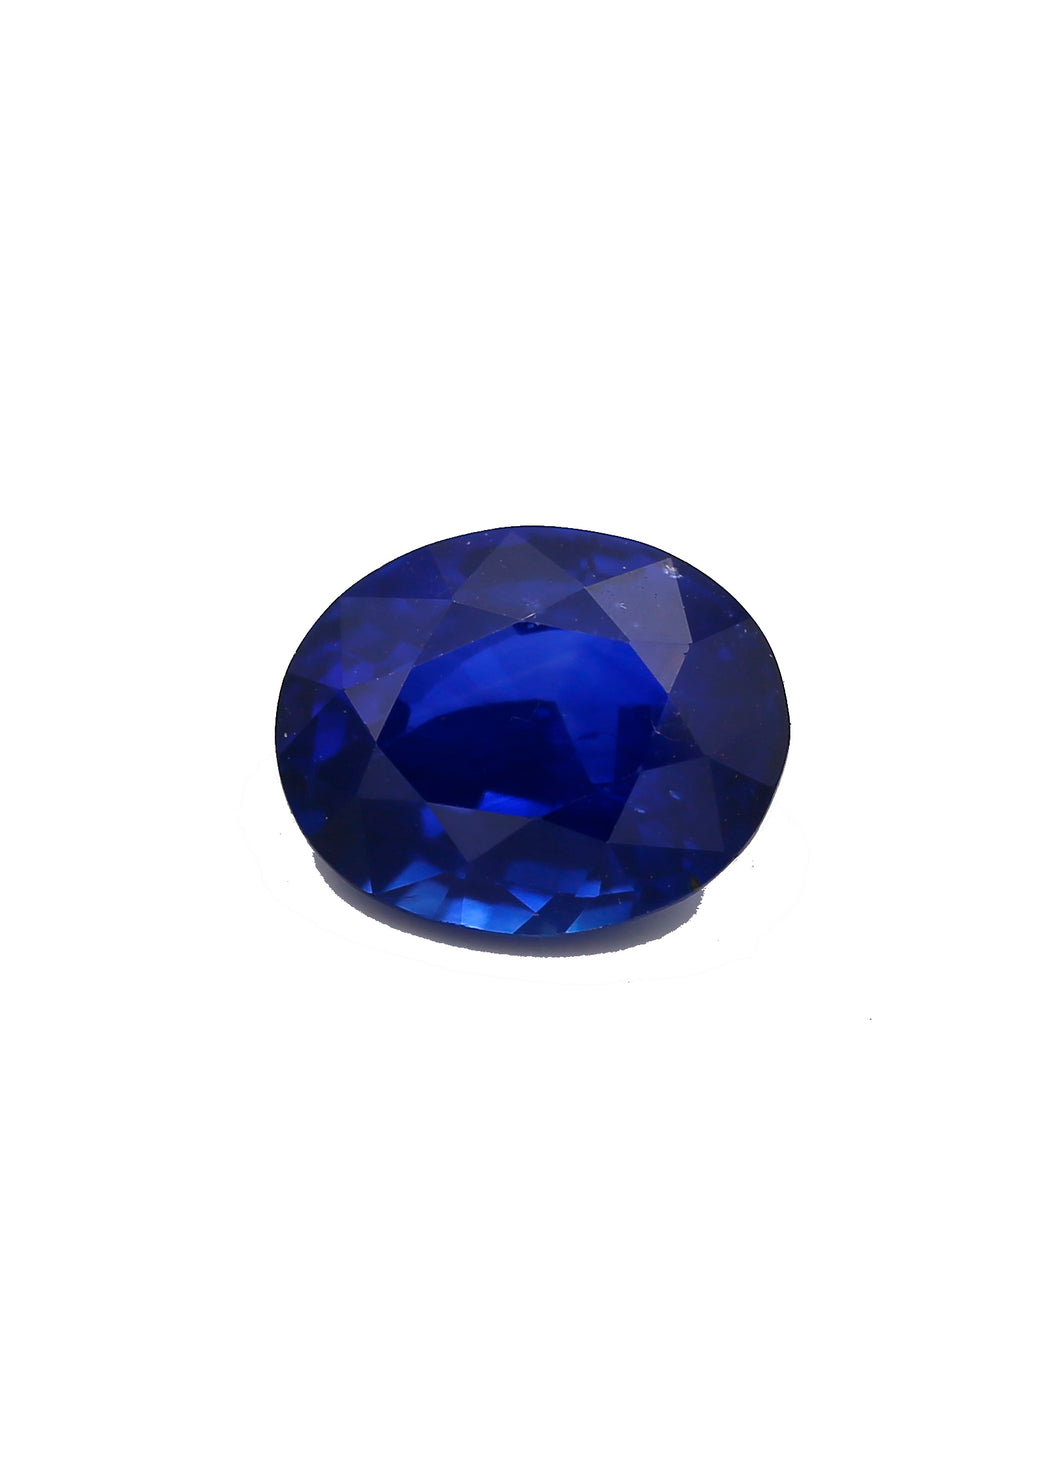 3.62ct Natural Royal Blue Sapphire.